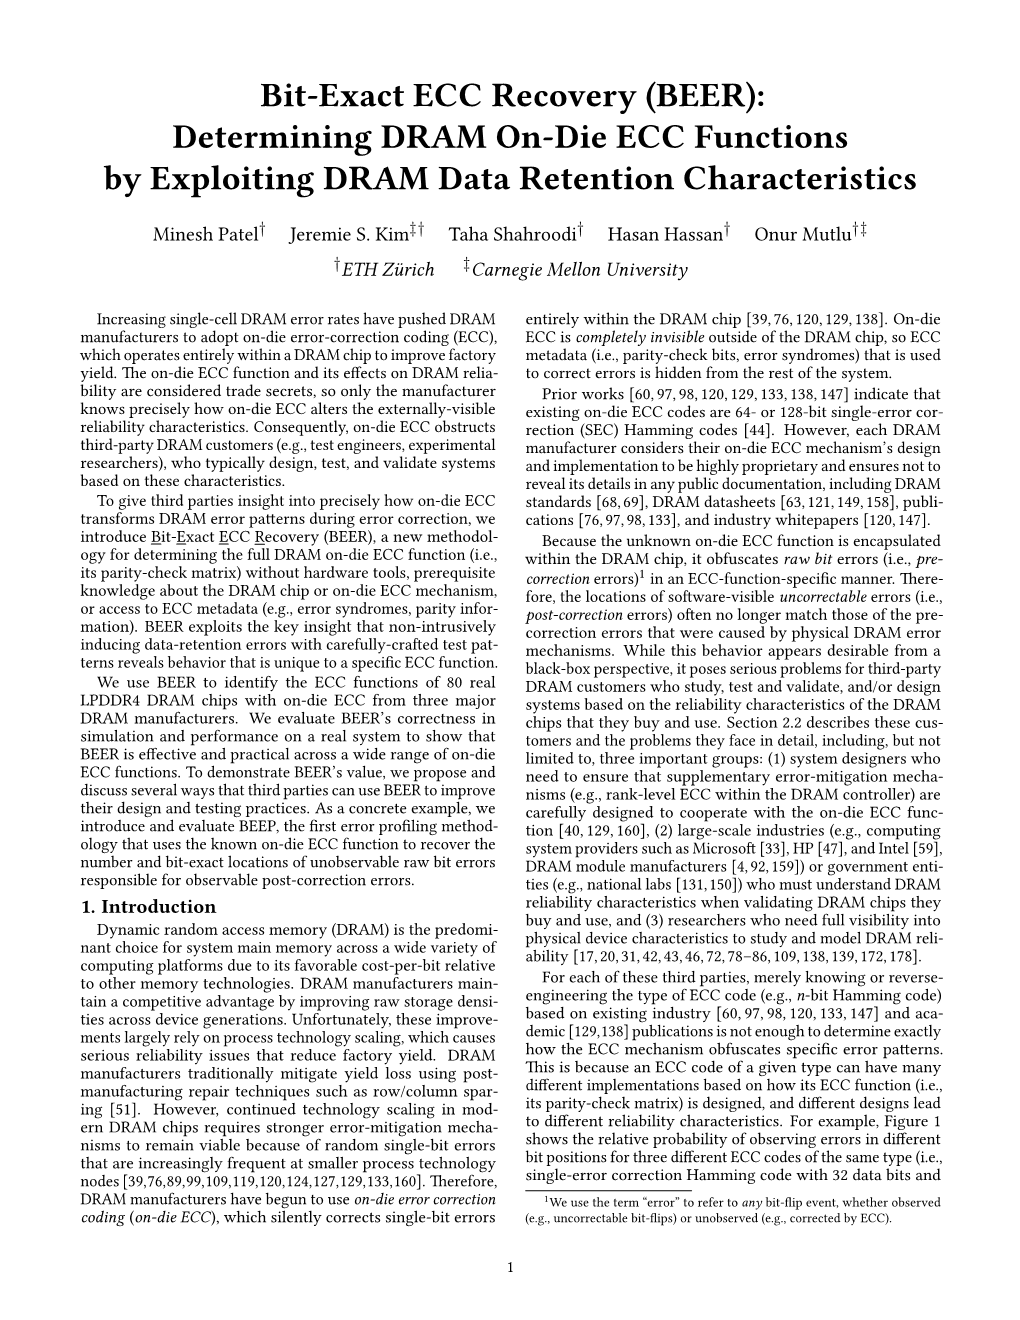 Bit-Exact ECC Recovery (BEER): Determining DRAM On-Die ECC Functions by Exploiting DRAM Data Retention Characteristics